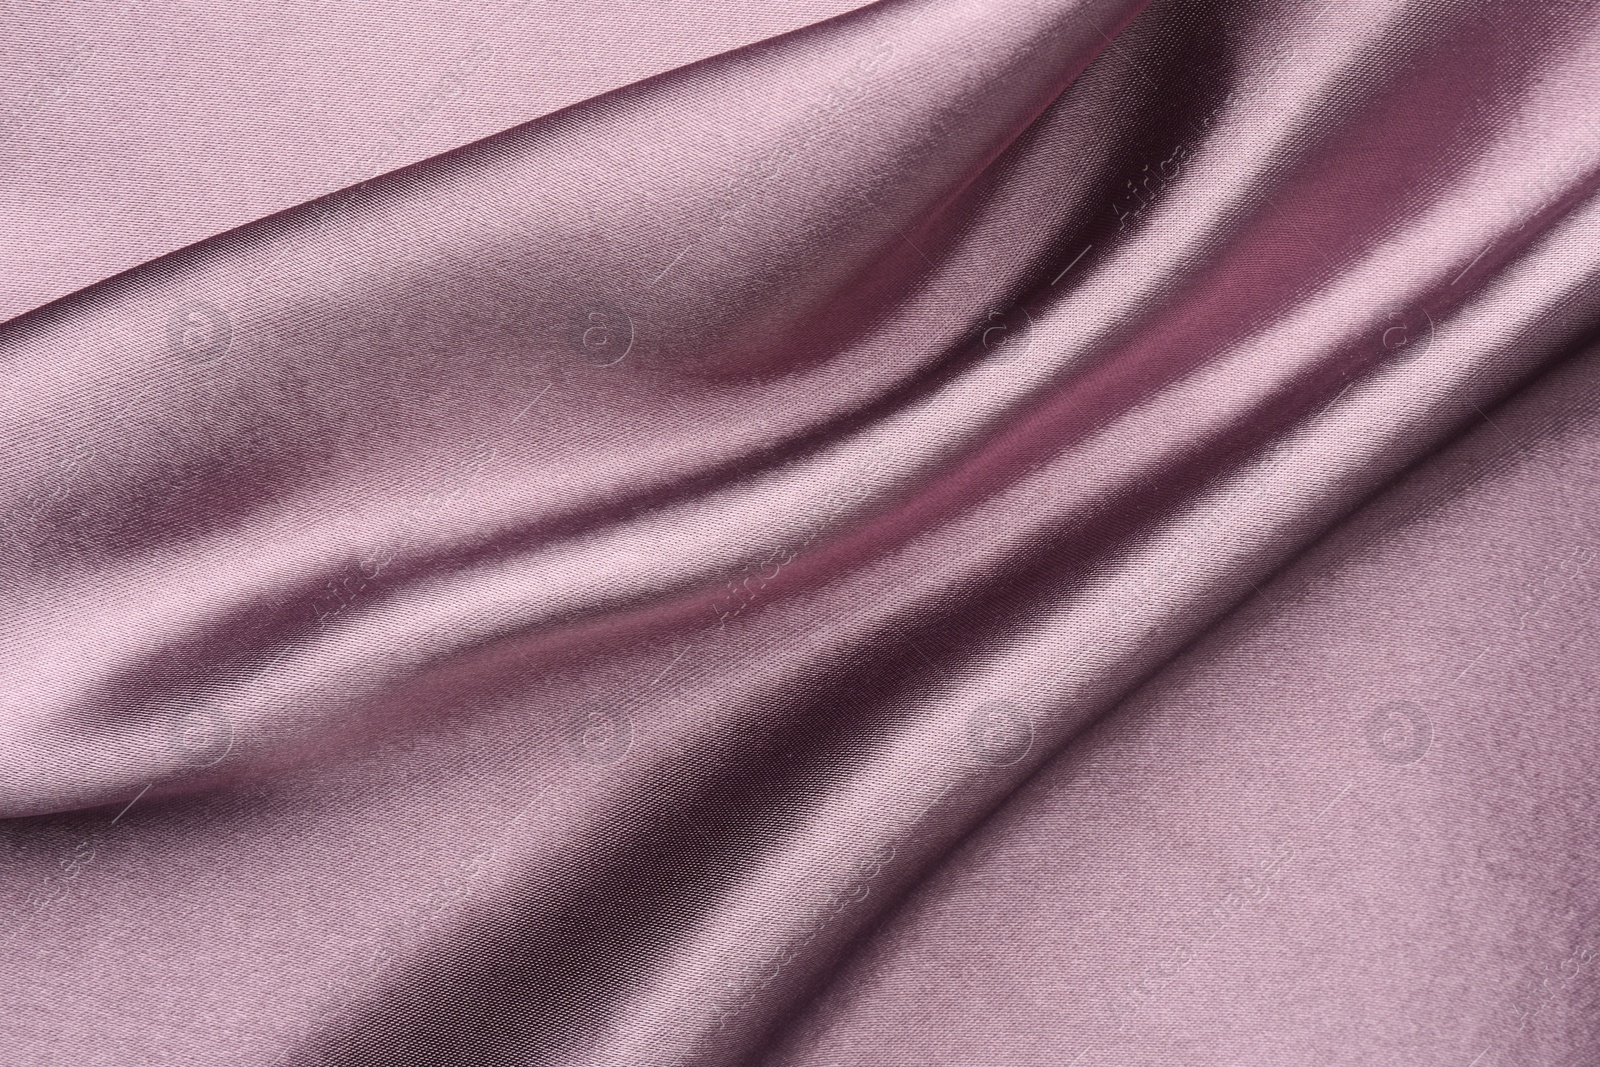 Photo of Crumpled dark purple silk fabric as background, top view